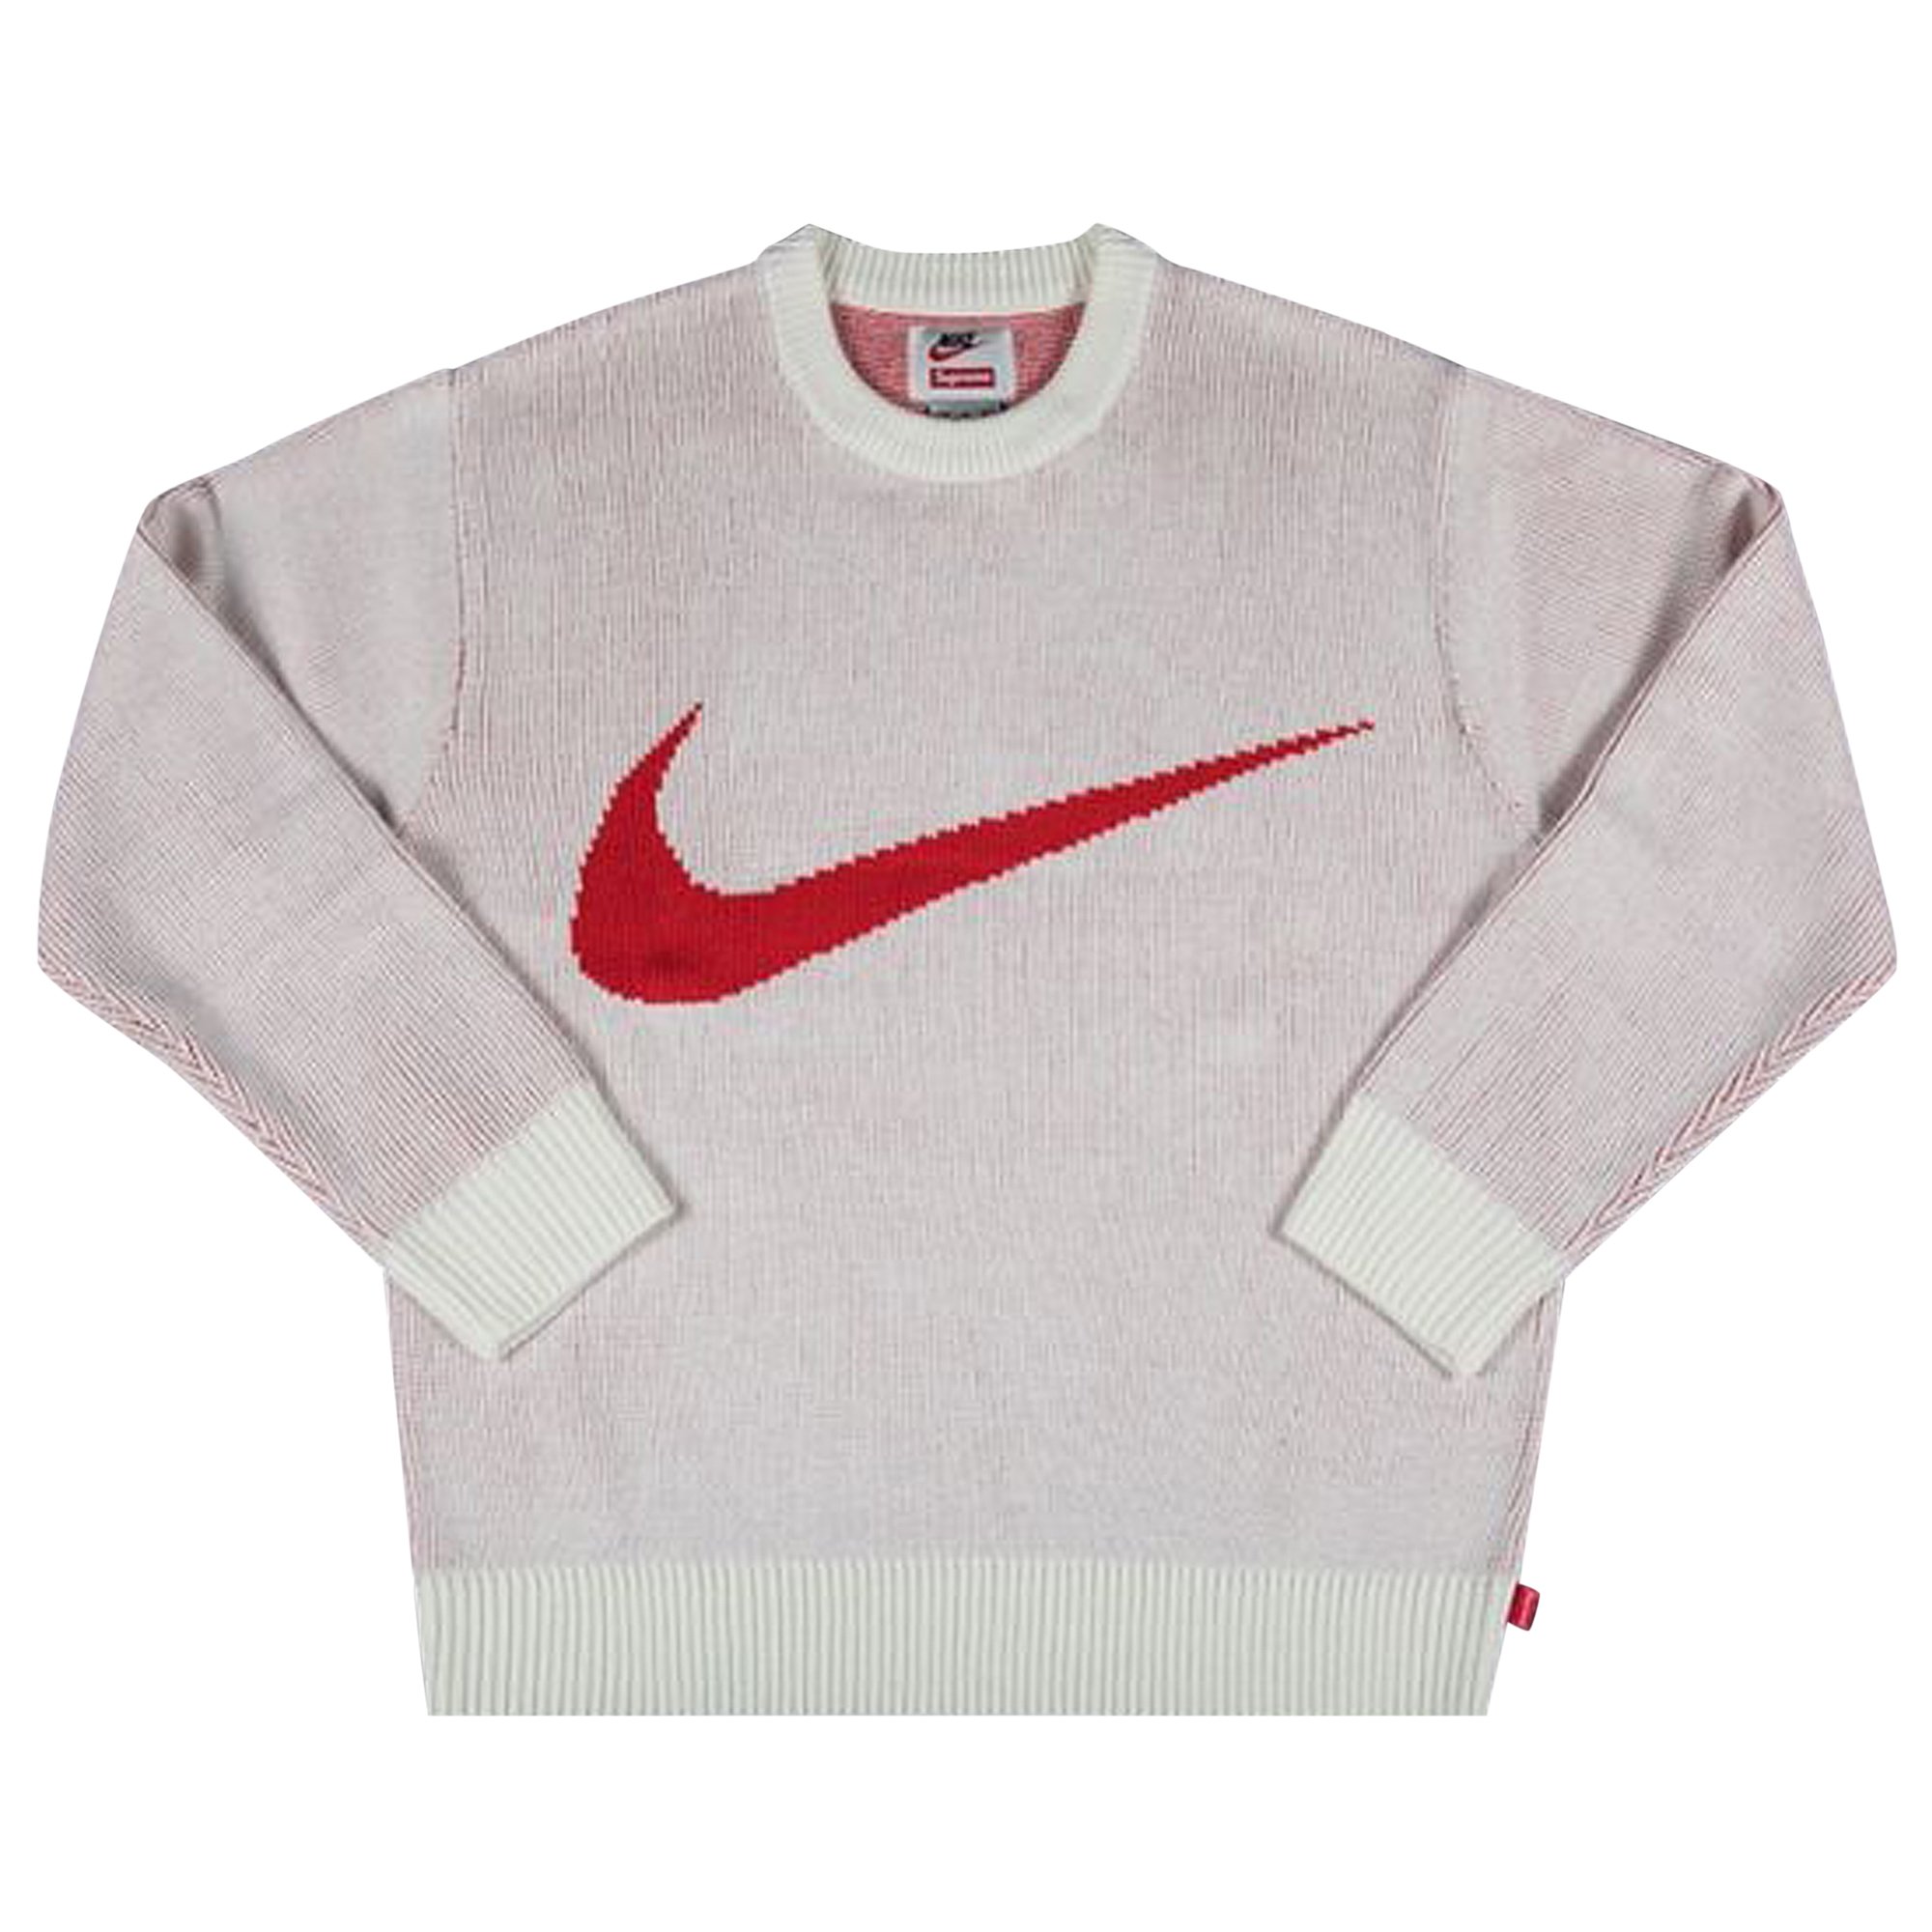 Supreme x Nike Swoosh Sweater 'White'